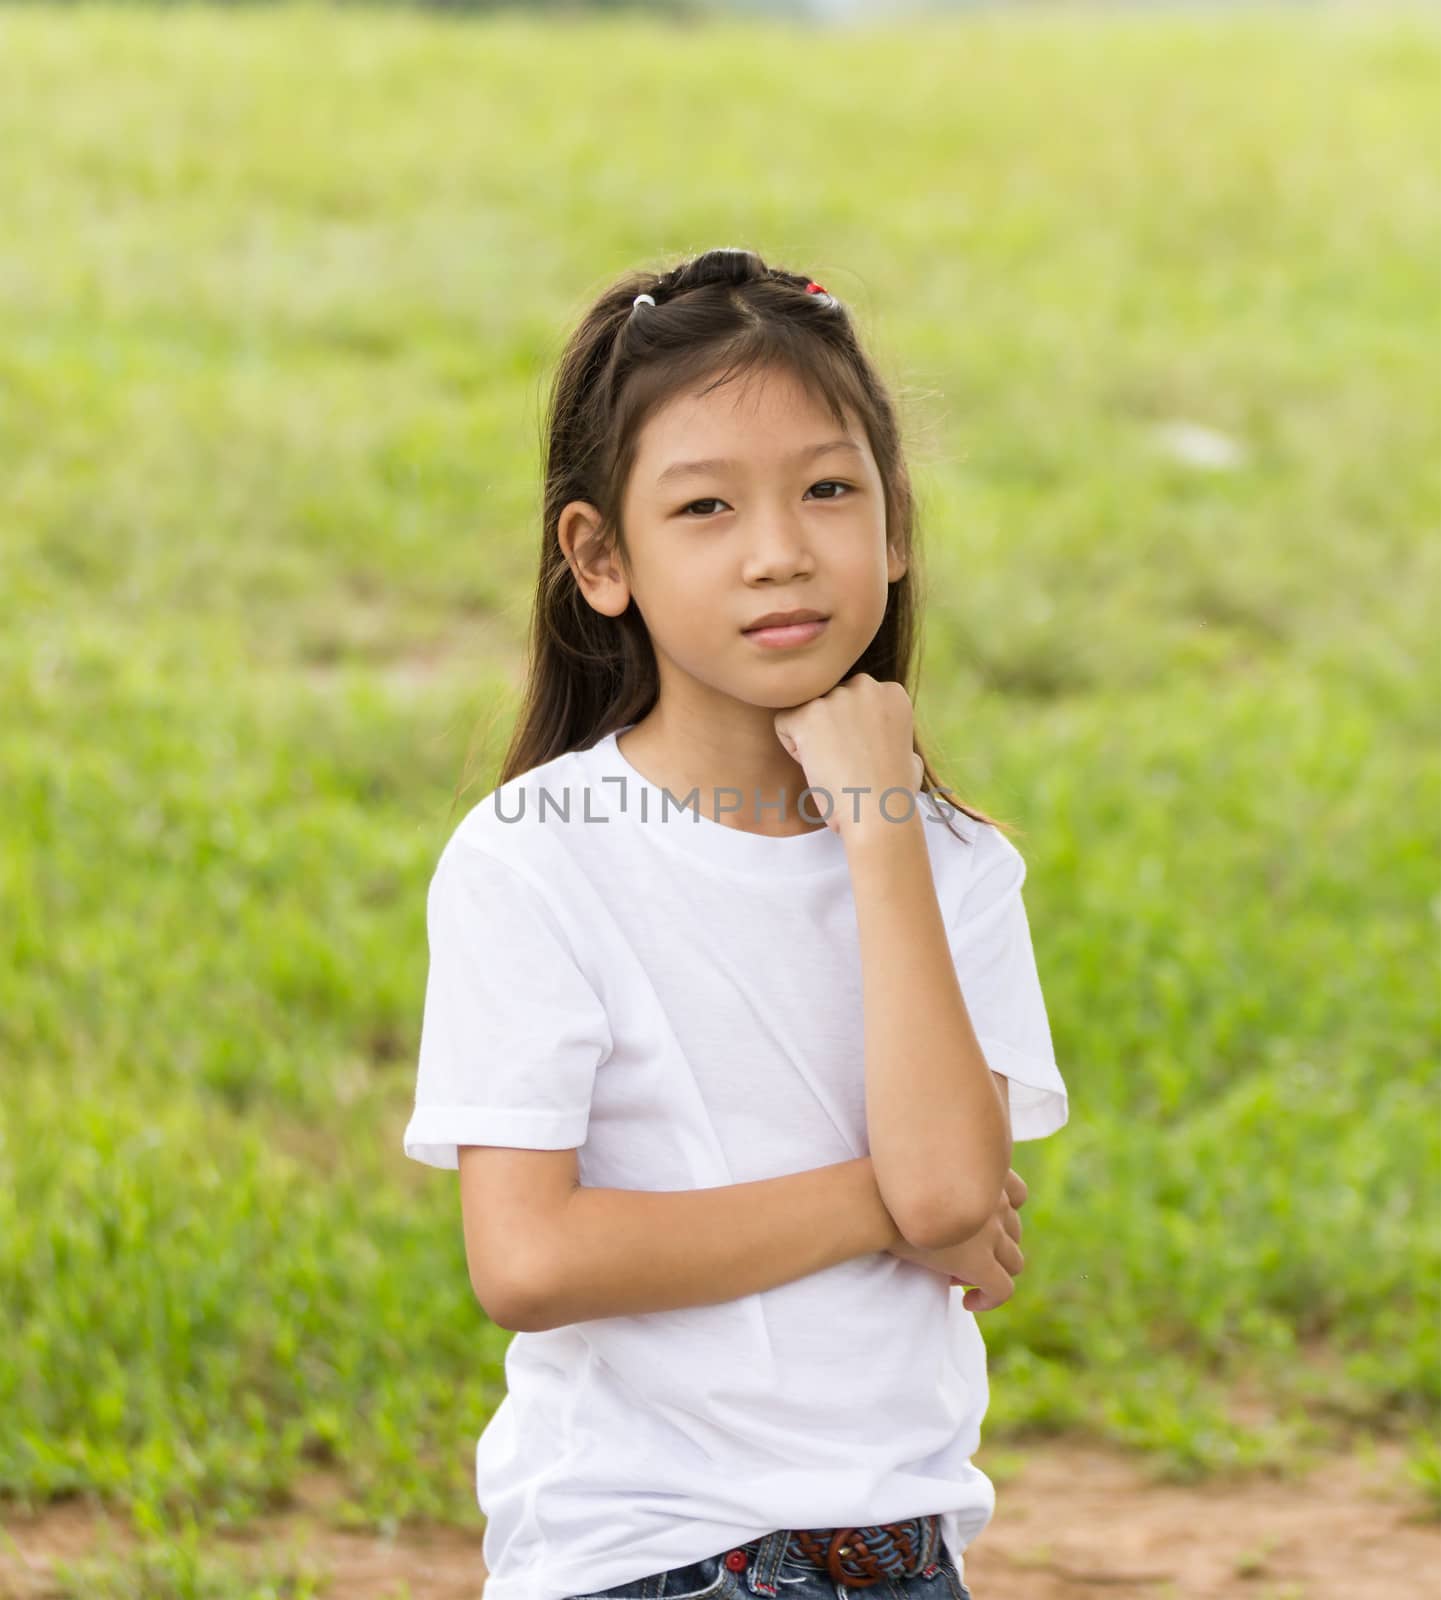 Outdoors portrait of beautiful Asian young girl